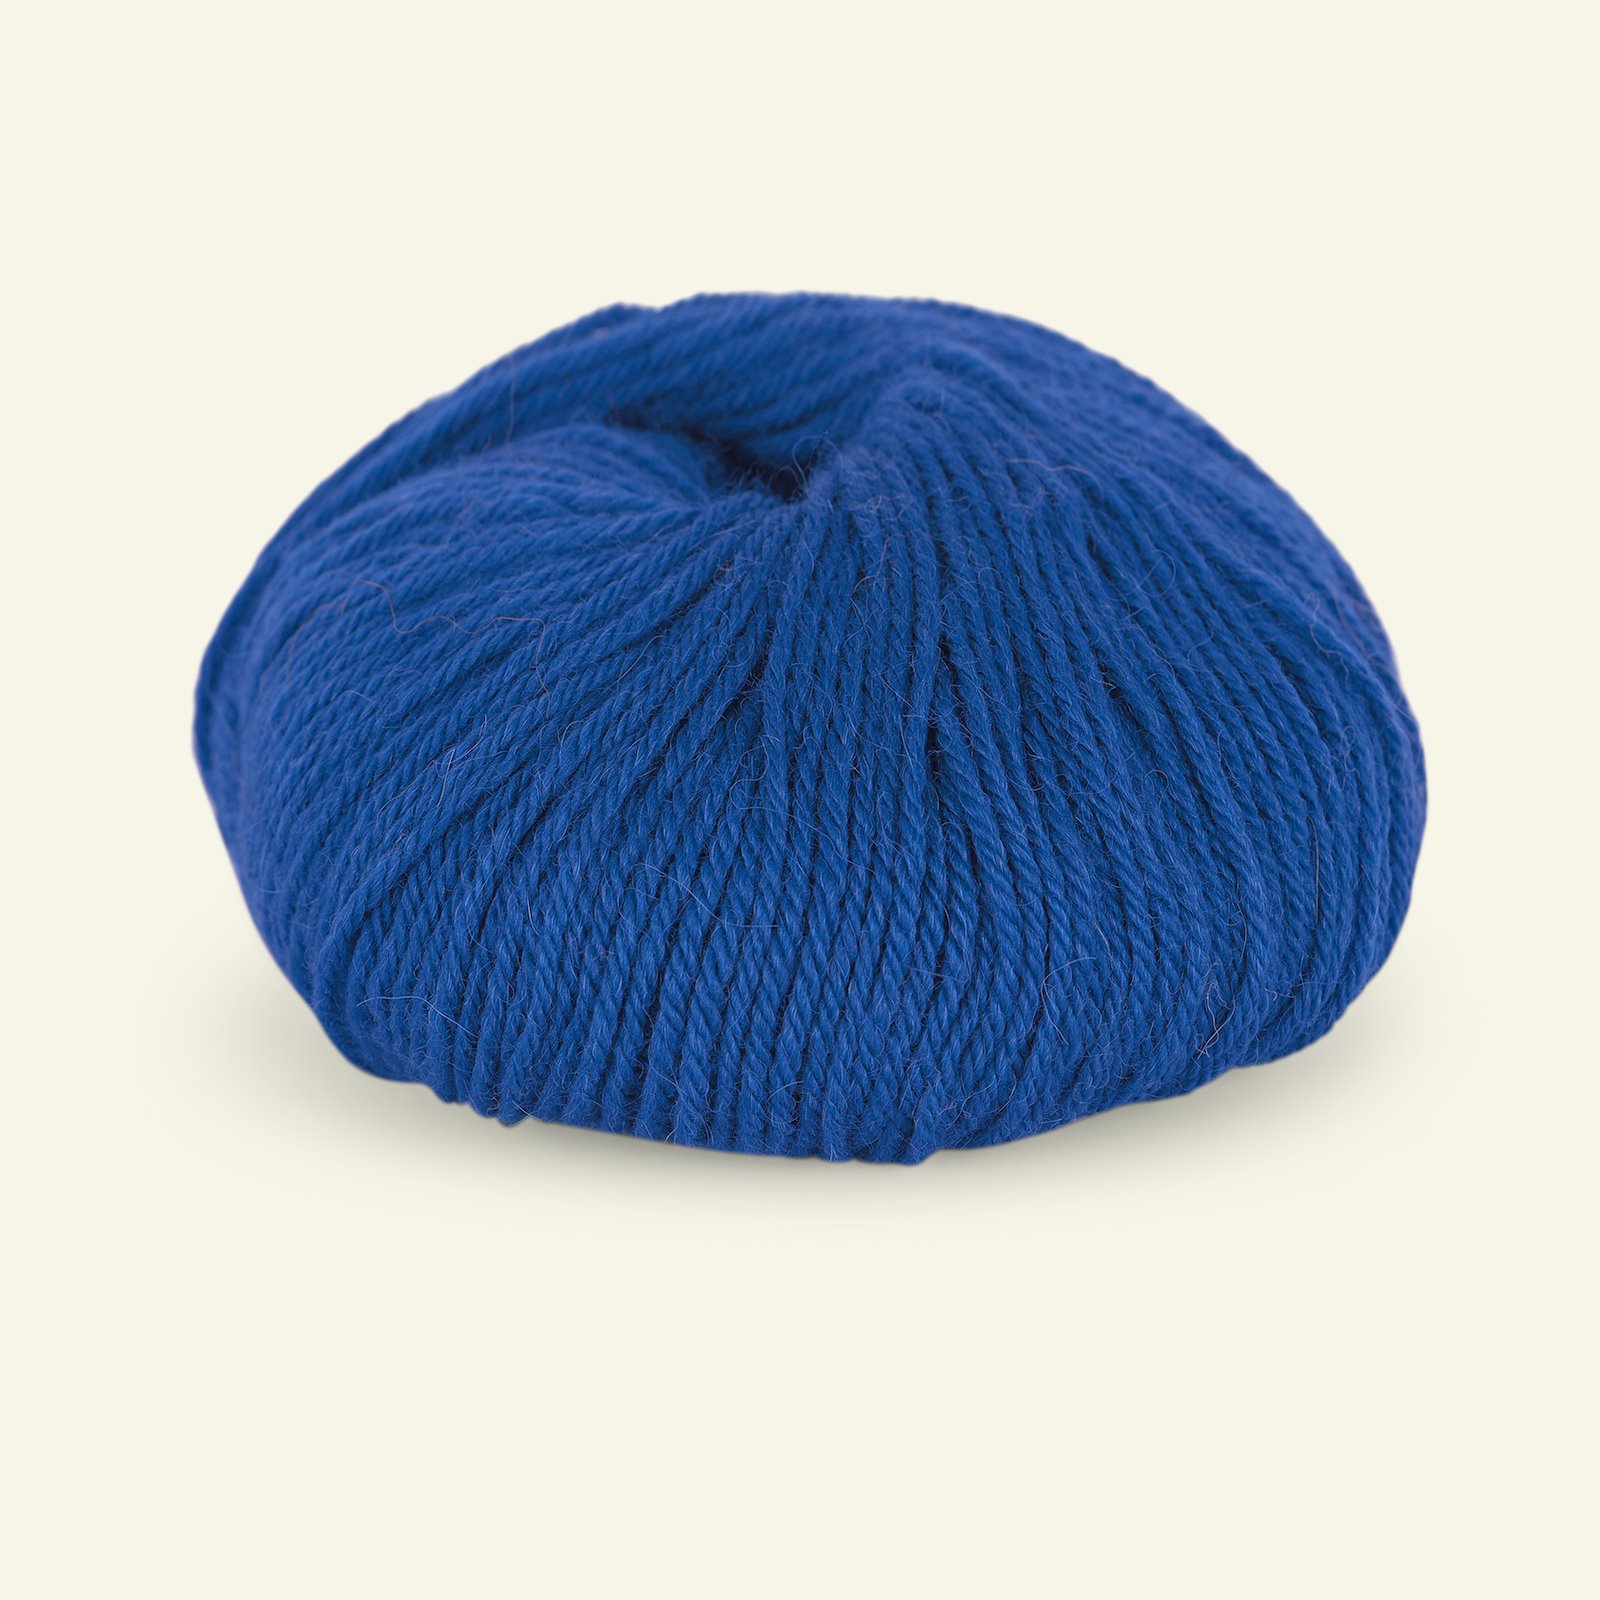 Du Store Alpakka, alpaca merino mixed yarn "Sterk", cobolt blue (904) 90000696_pack_b